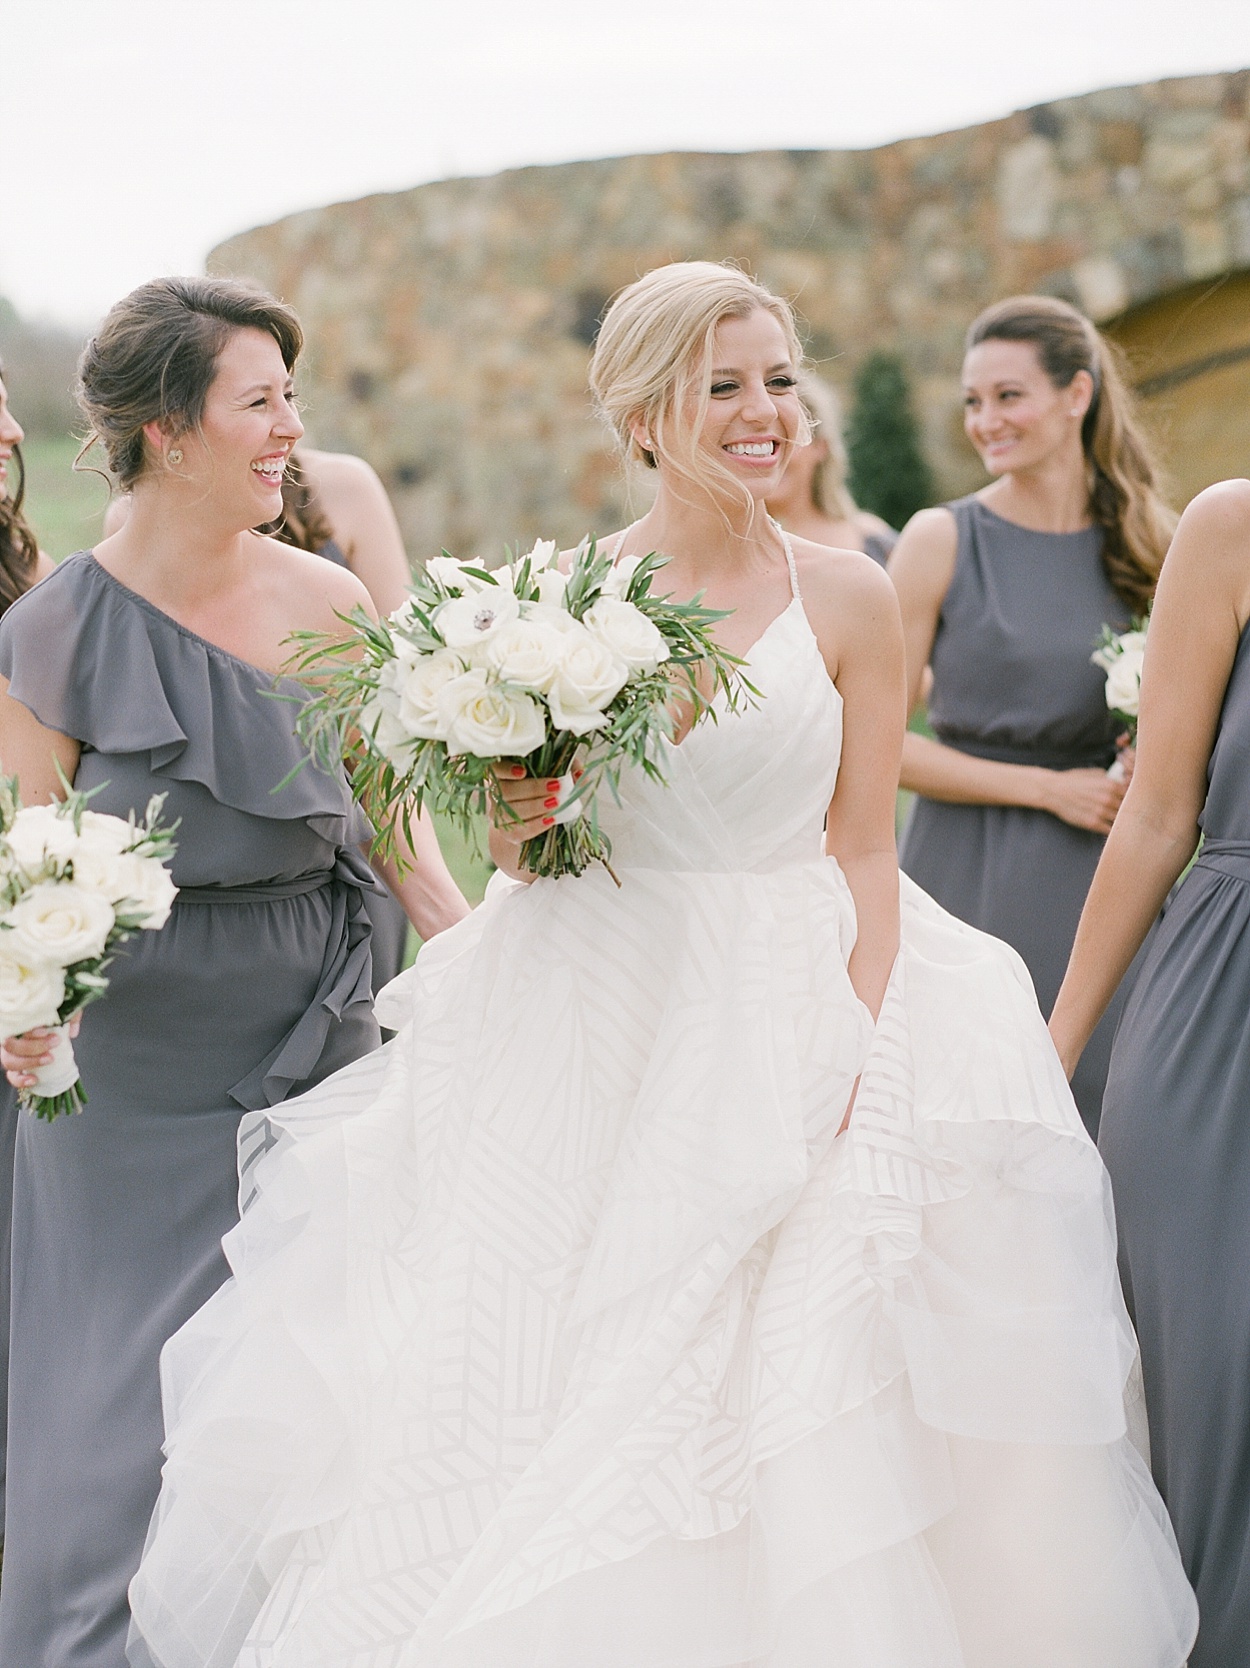 Steve & Kristin | Tuscan wedding at Stone Tower Winery - Abby Grace Blog